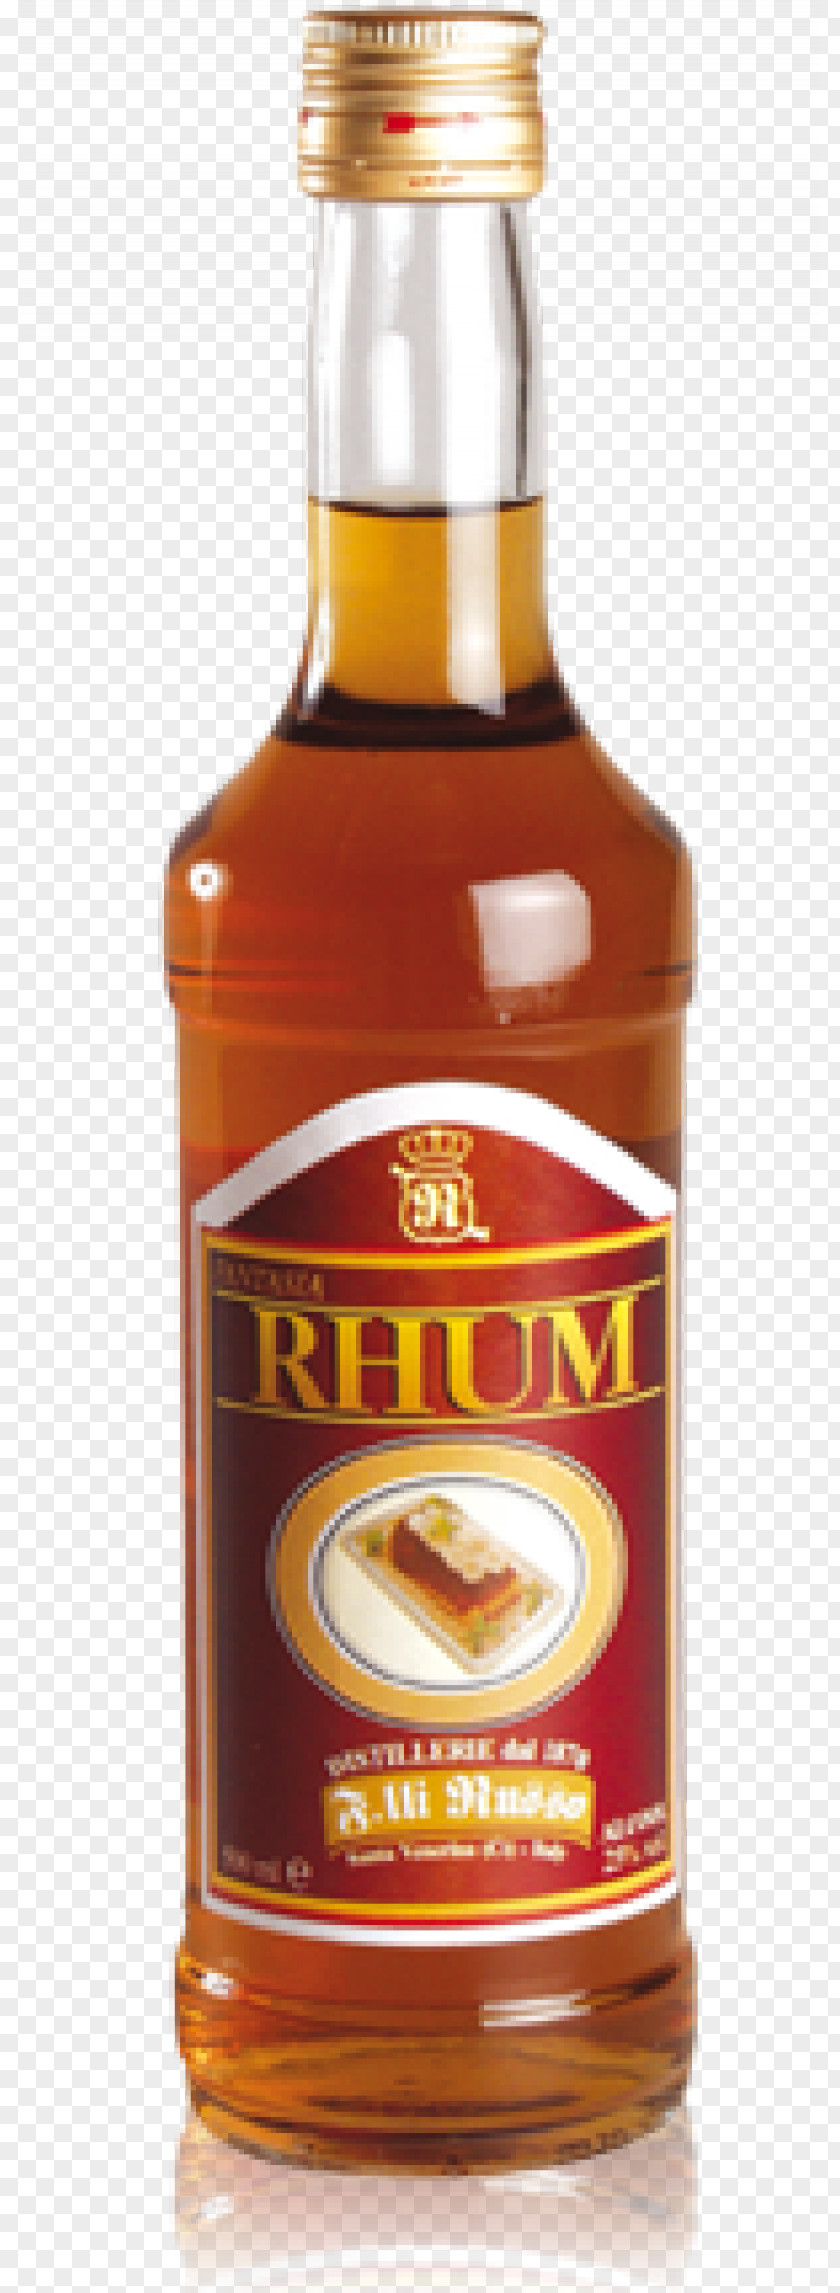 Rhum Liqueur Distilled Beverage Cocktail Alcoholic Drink Rum Baba PNG